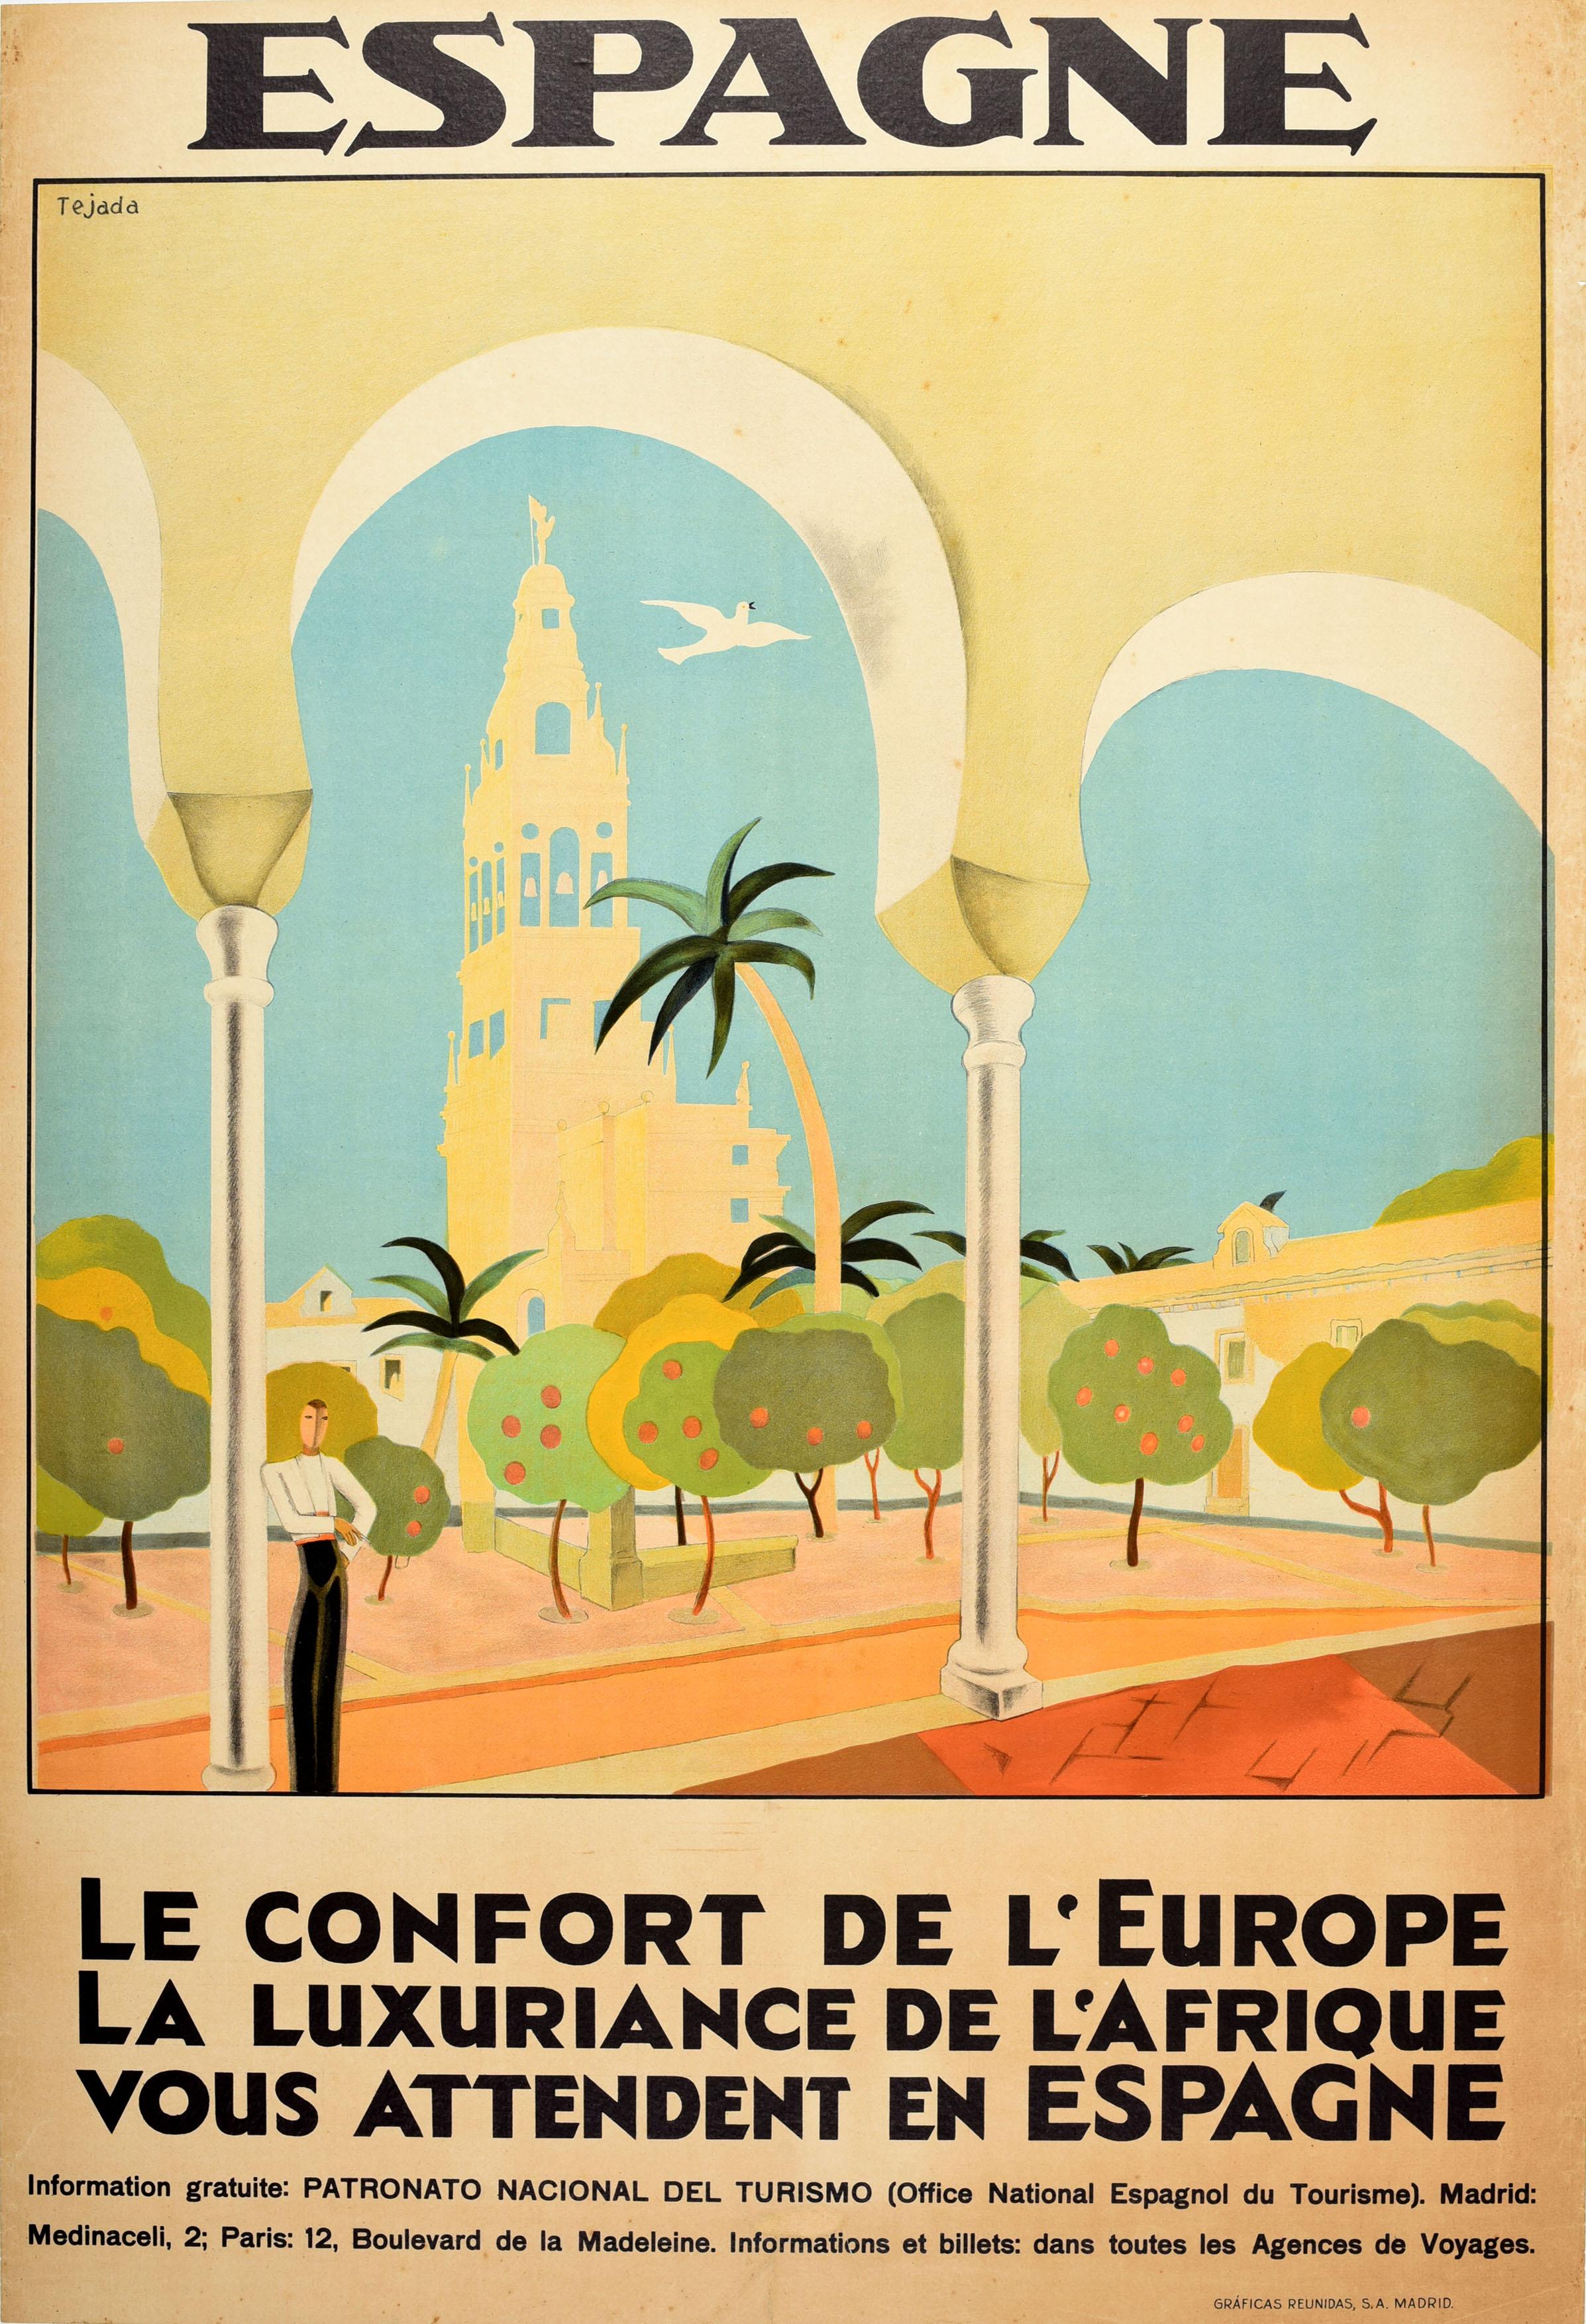 Unknown Print - Original Vintage Travel Poster Spain Art Deco Espagne Cordoba Mosque Cathedral